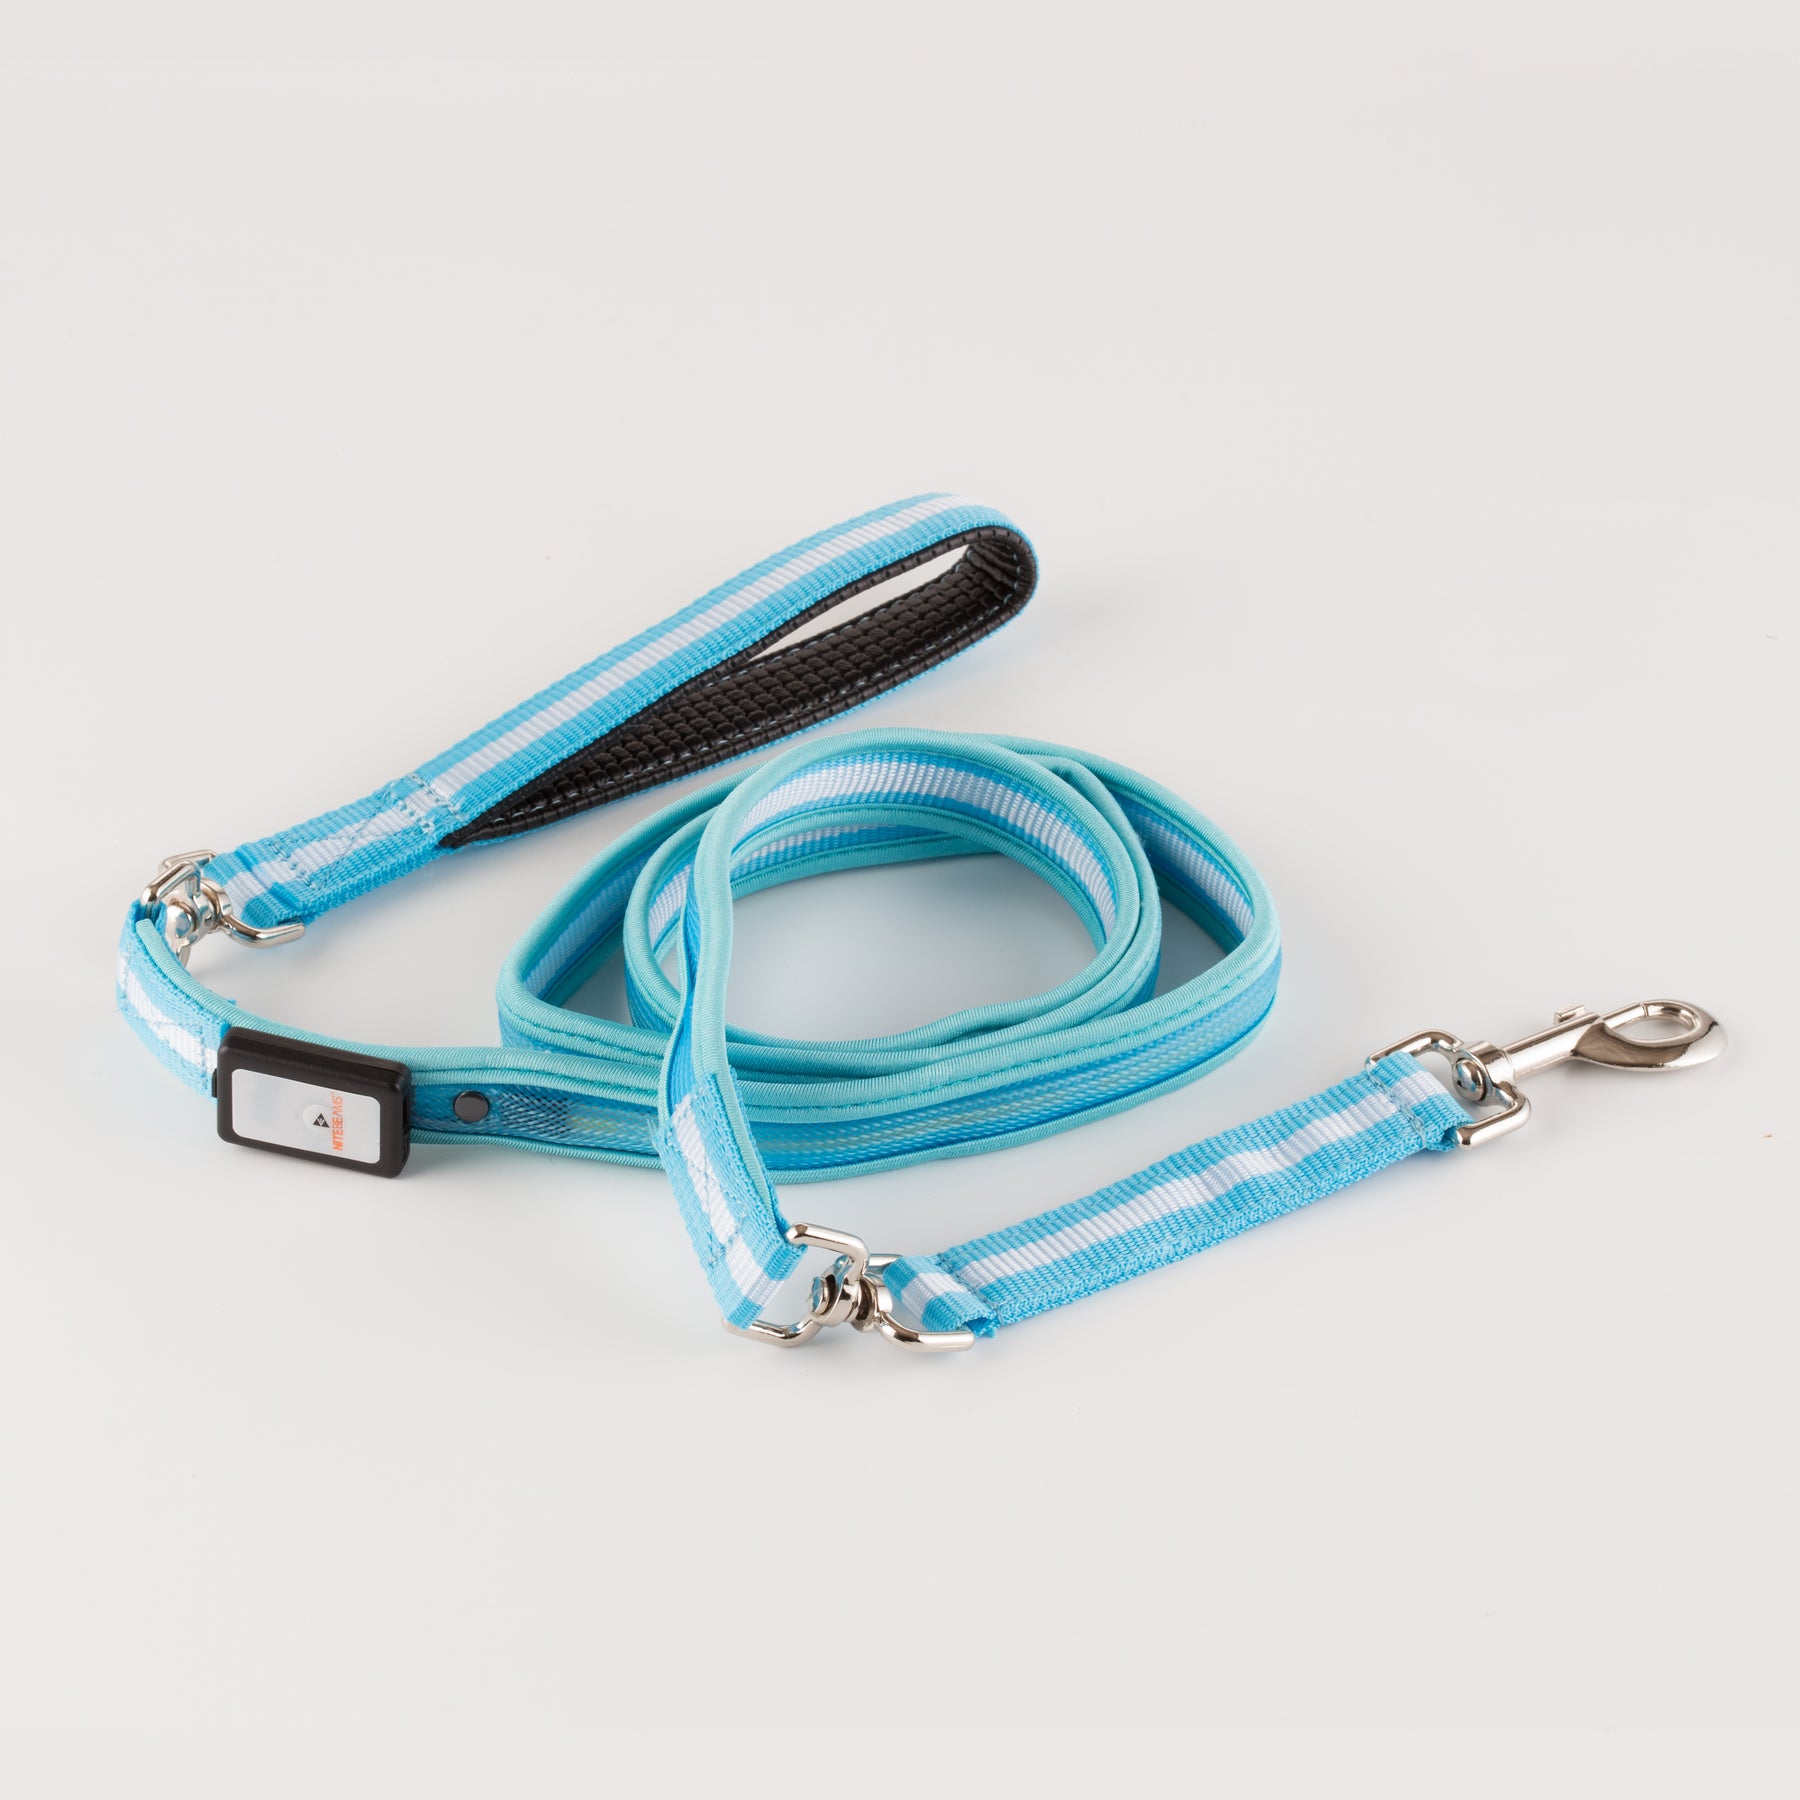 Nite Beams LED USB Rechargeable Lighted Dog Leash | KeepDoggieSafe.com ...